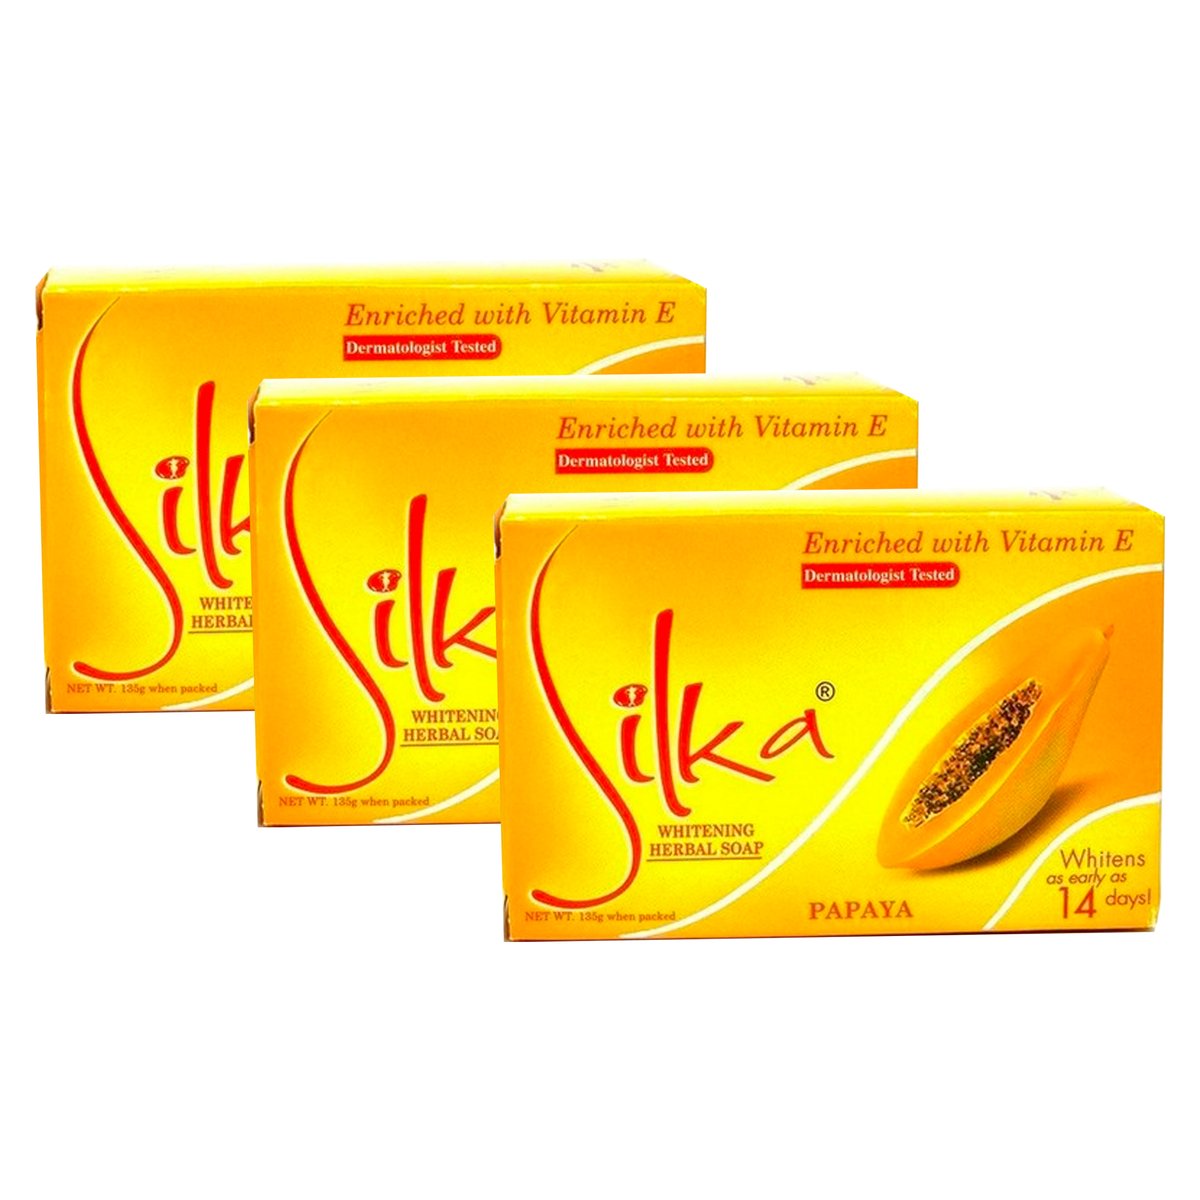 Silka Papaya Whitening Herbal Soap Value Pack 3 x 135g